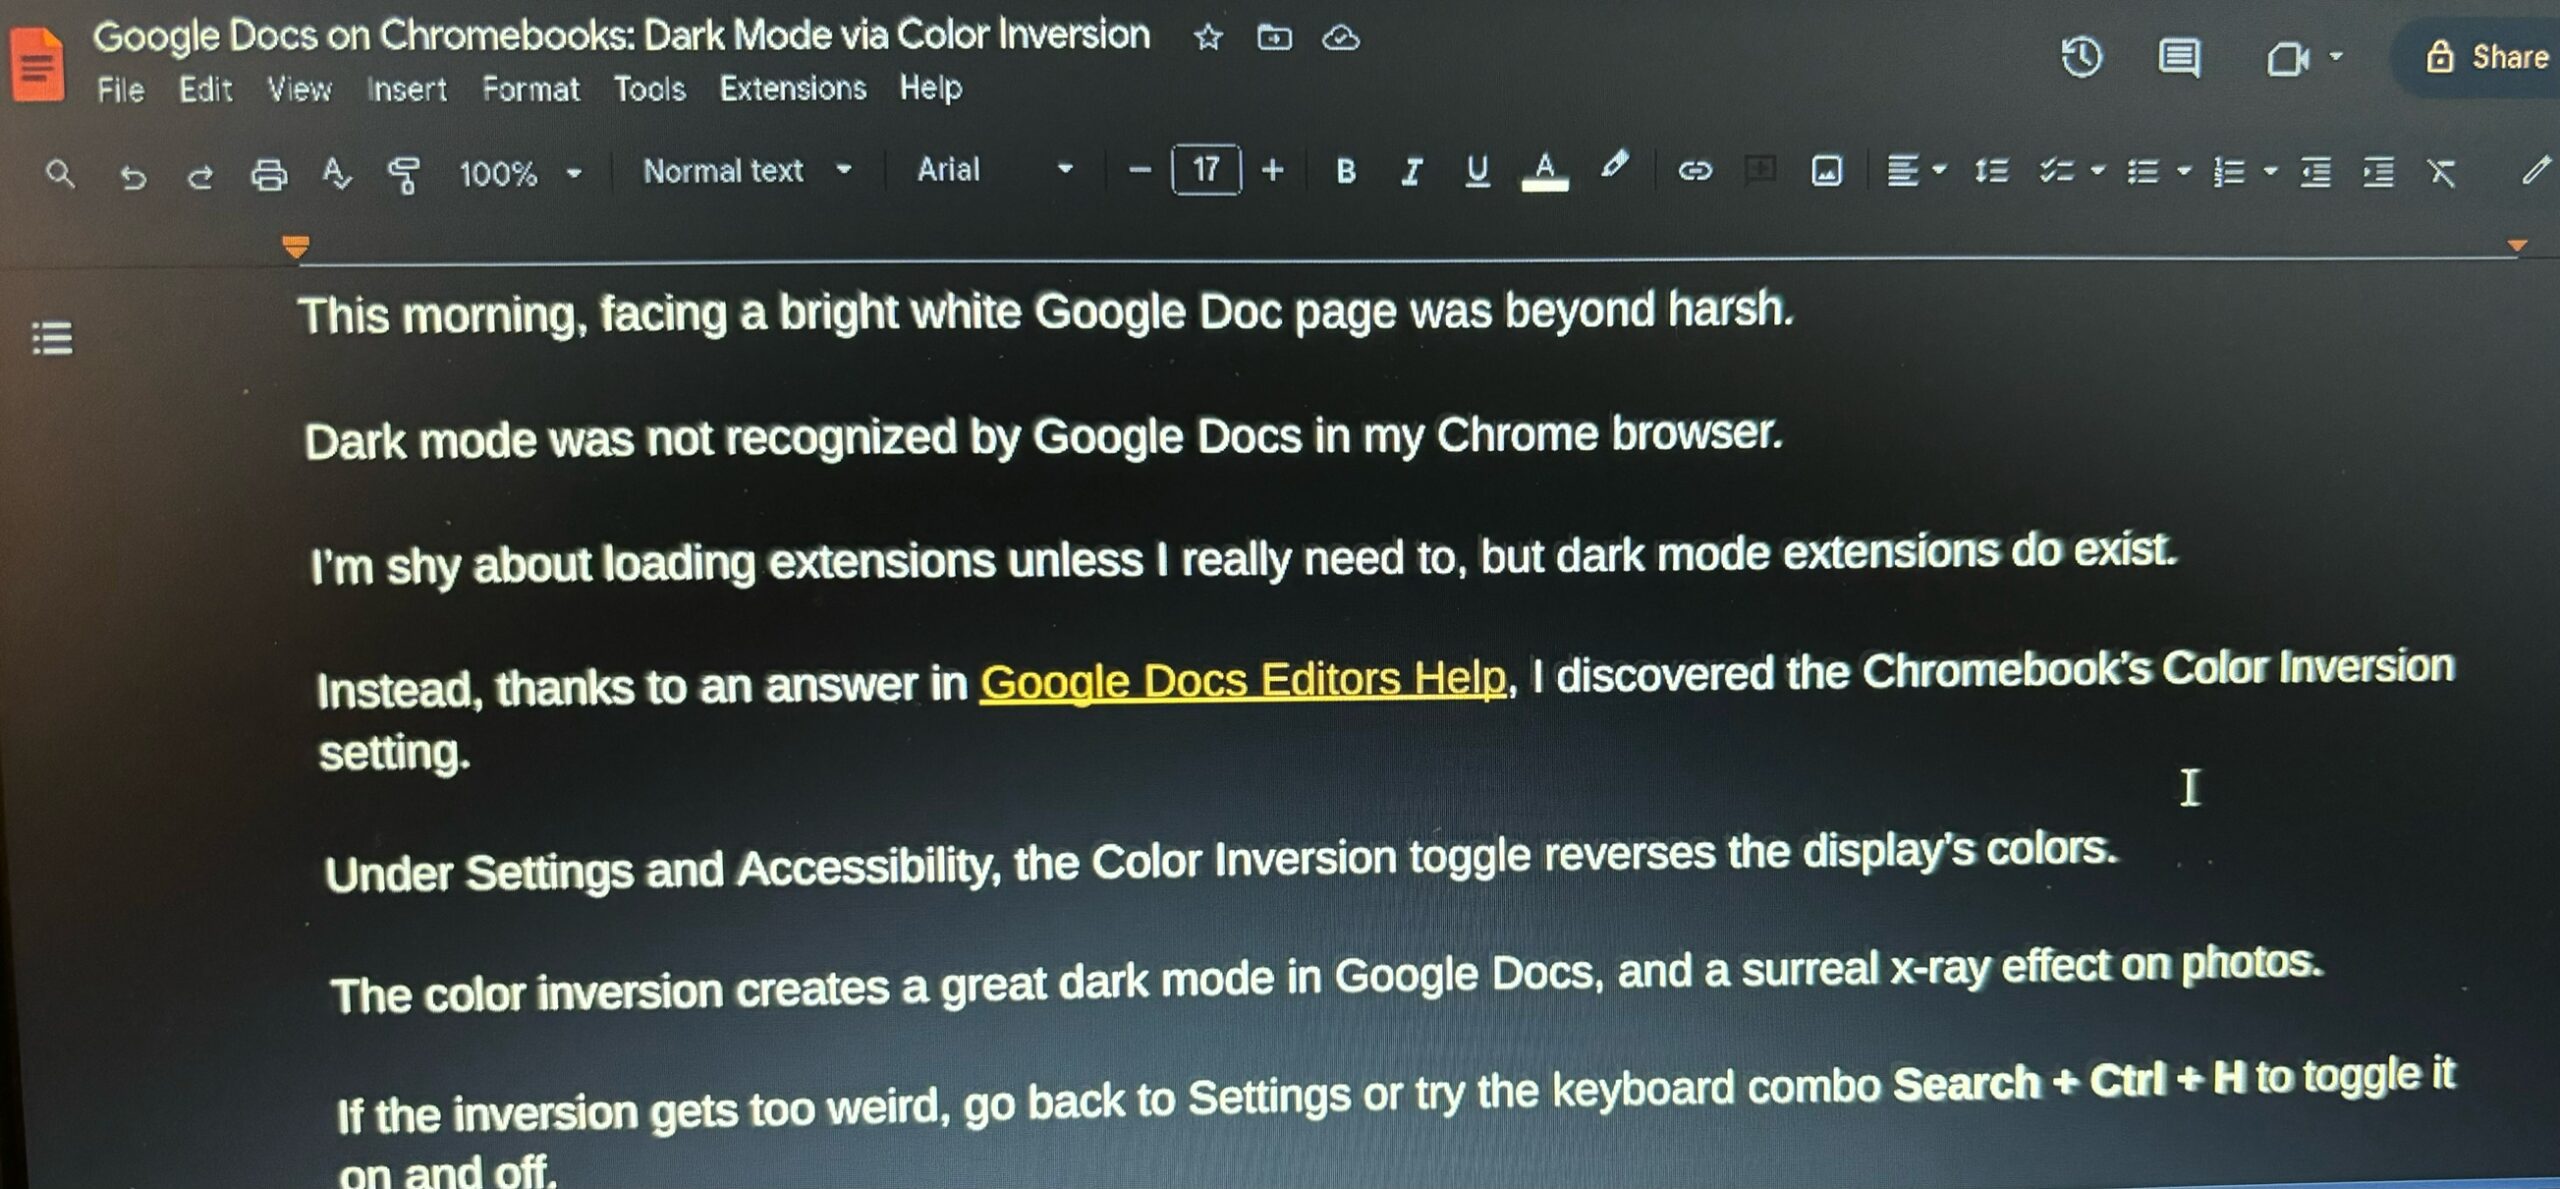 Dark Mode in Google Docs on Chromebooks: Color Inversion